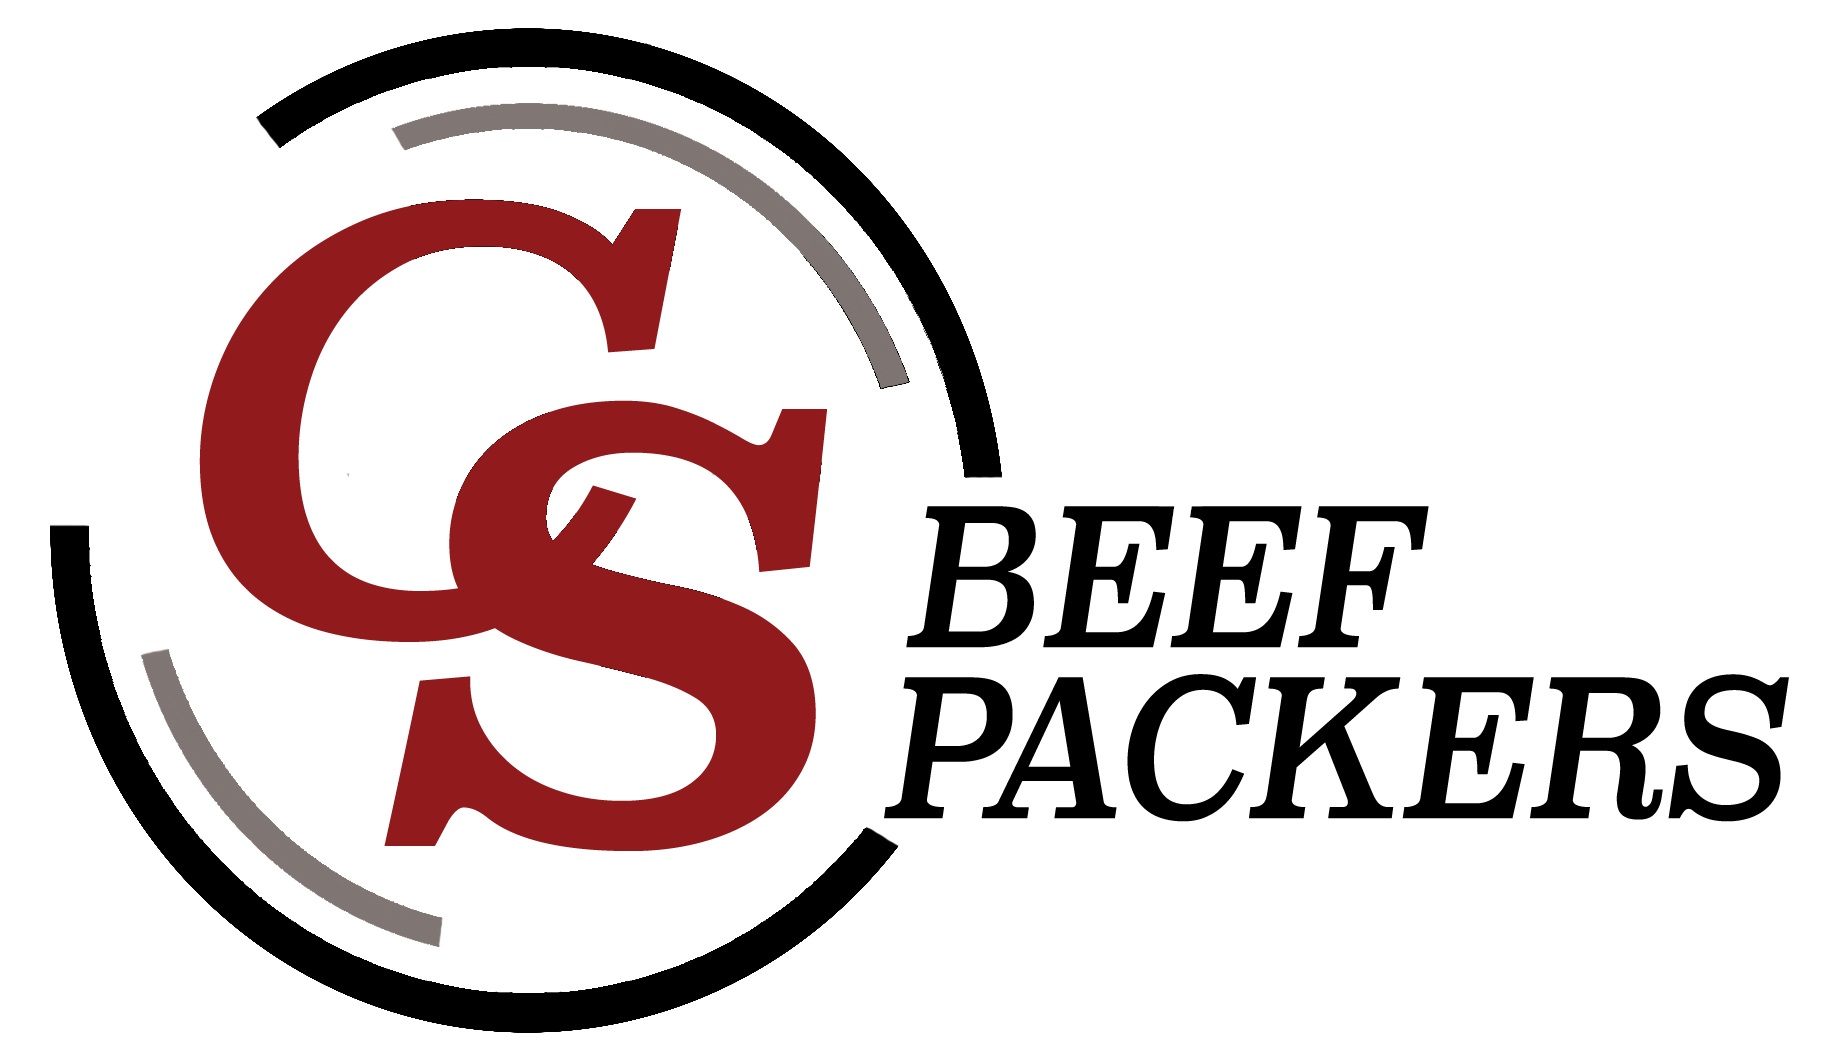 CS Beef Packers Logo